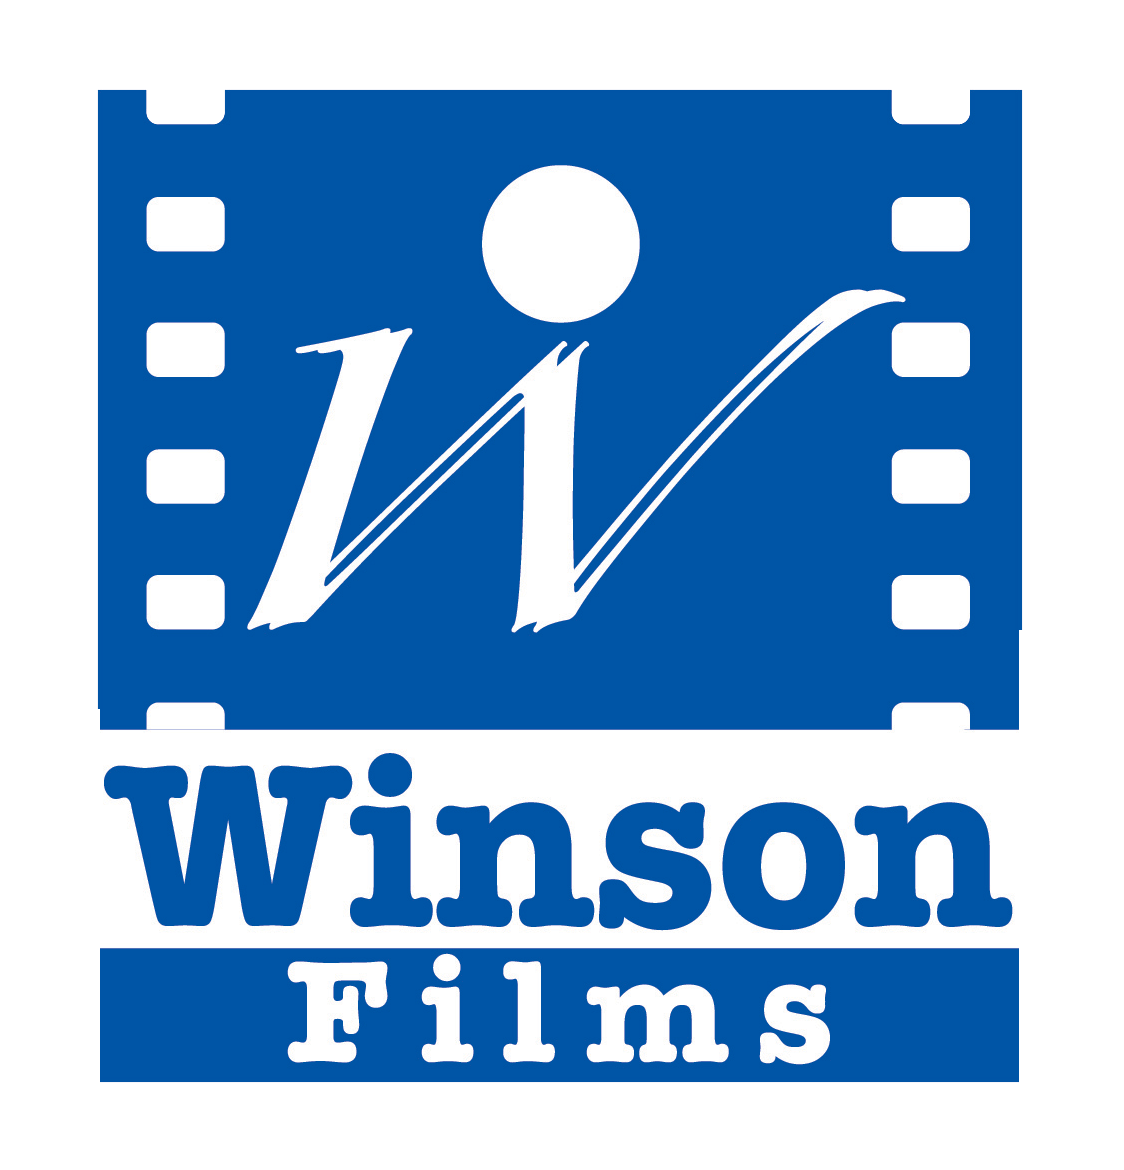 Winson films